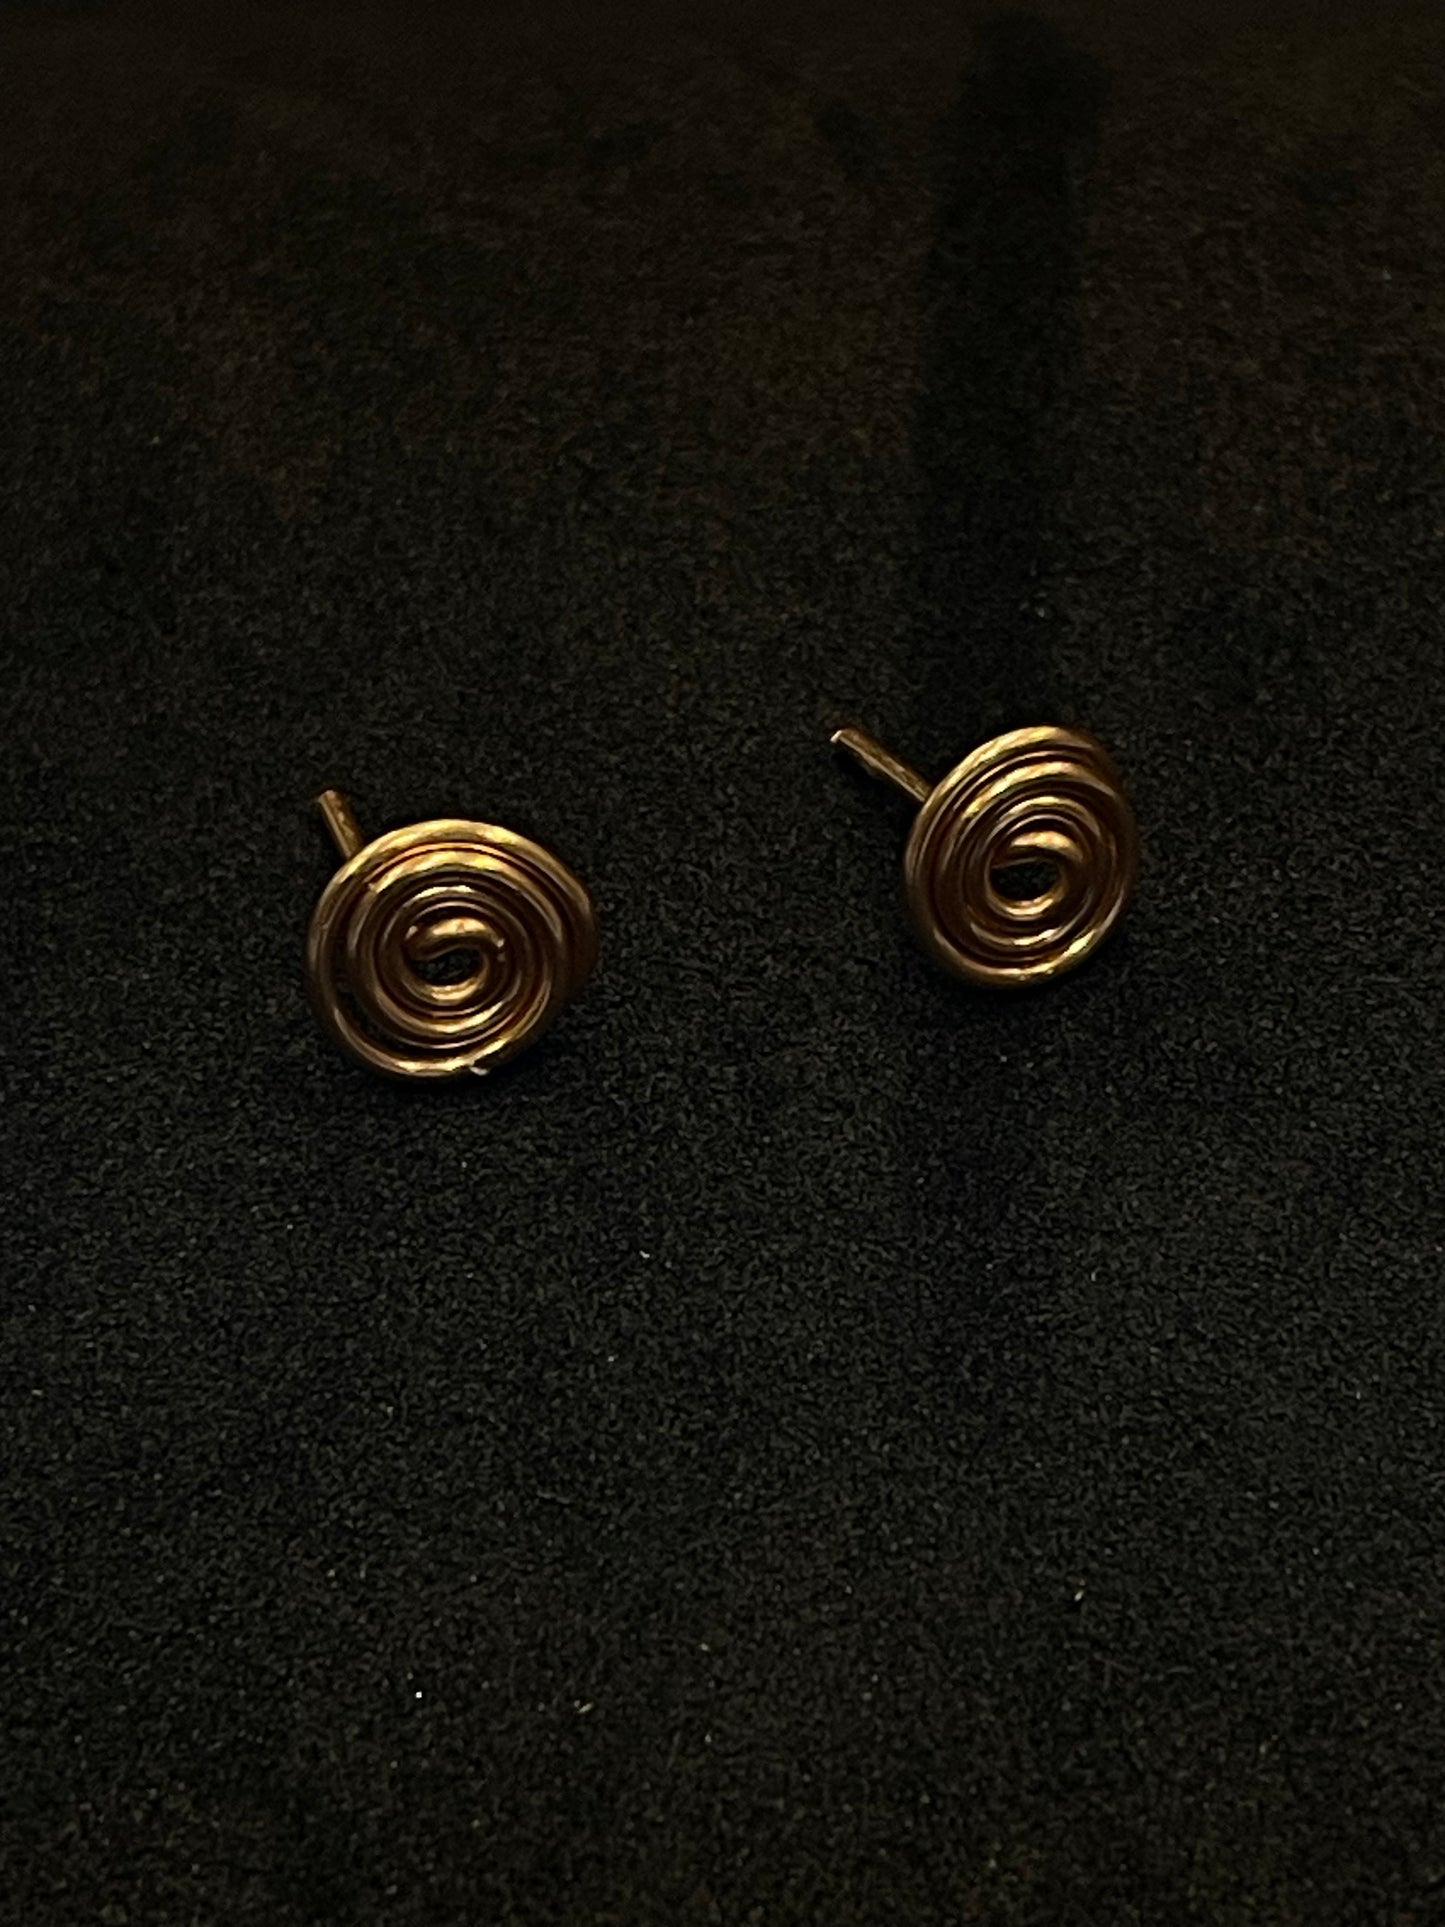 Silver wire coil stud earrings